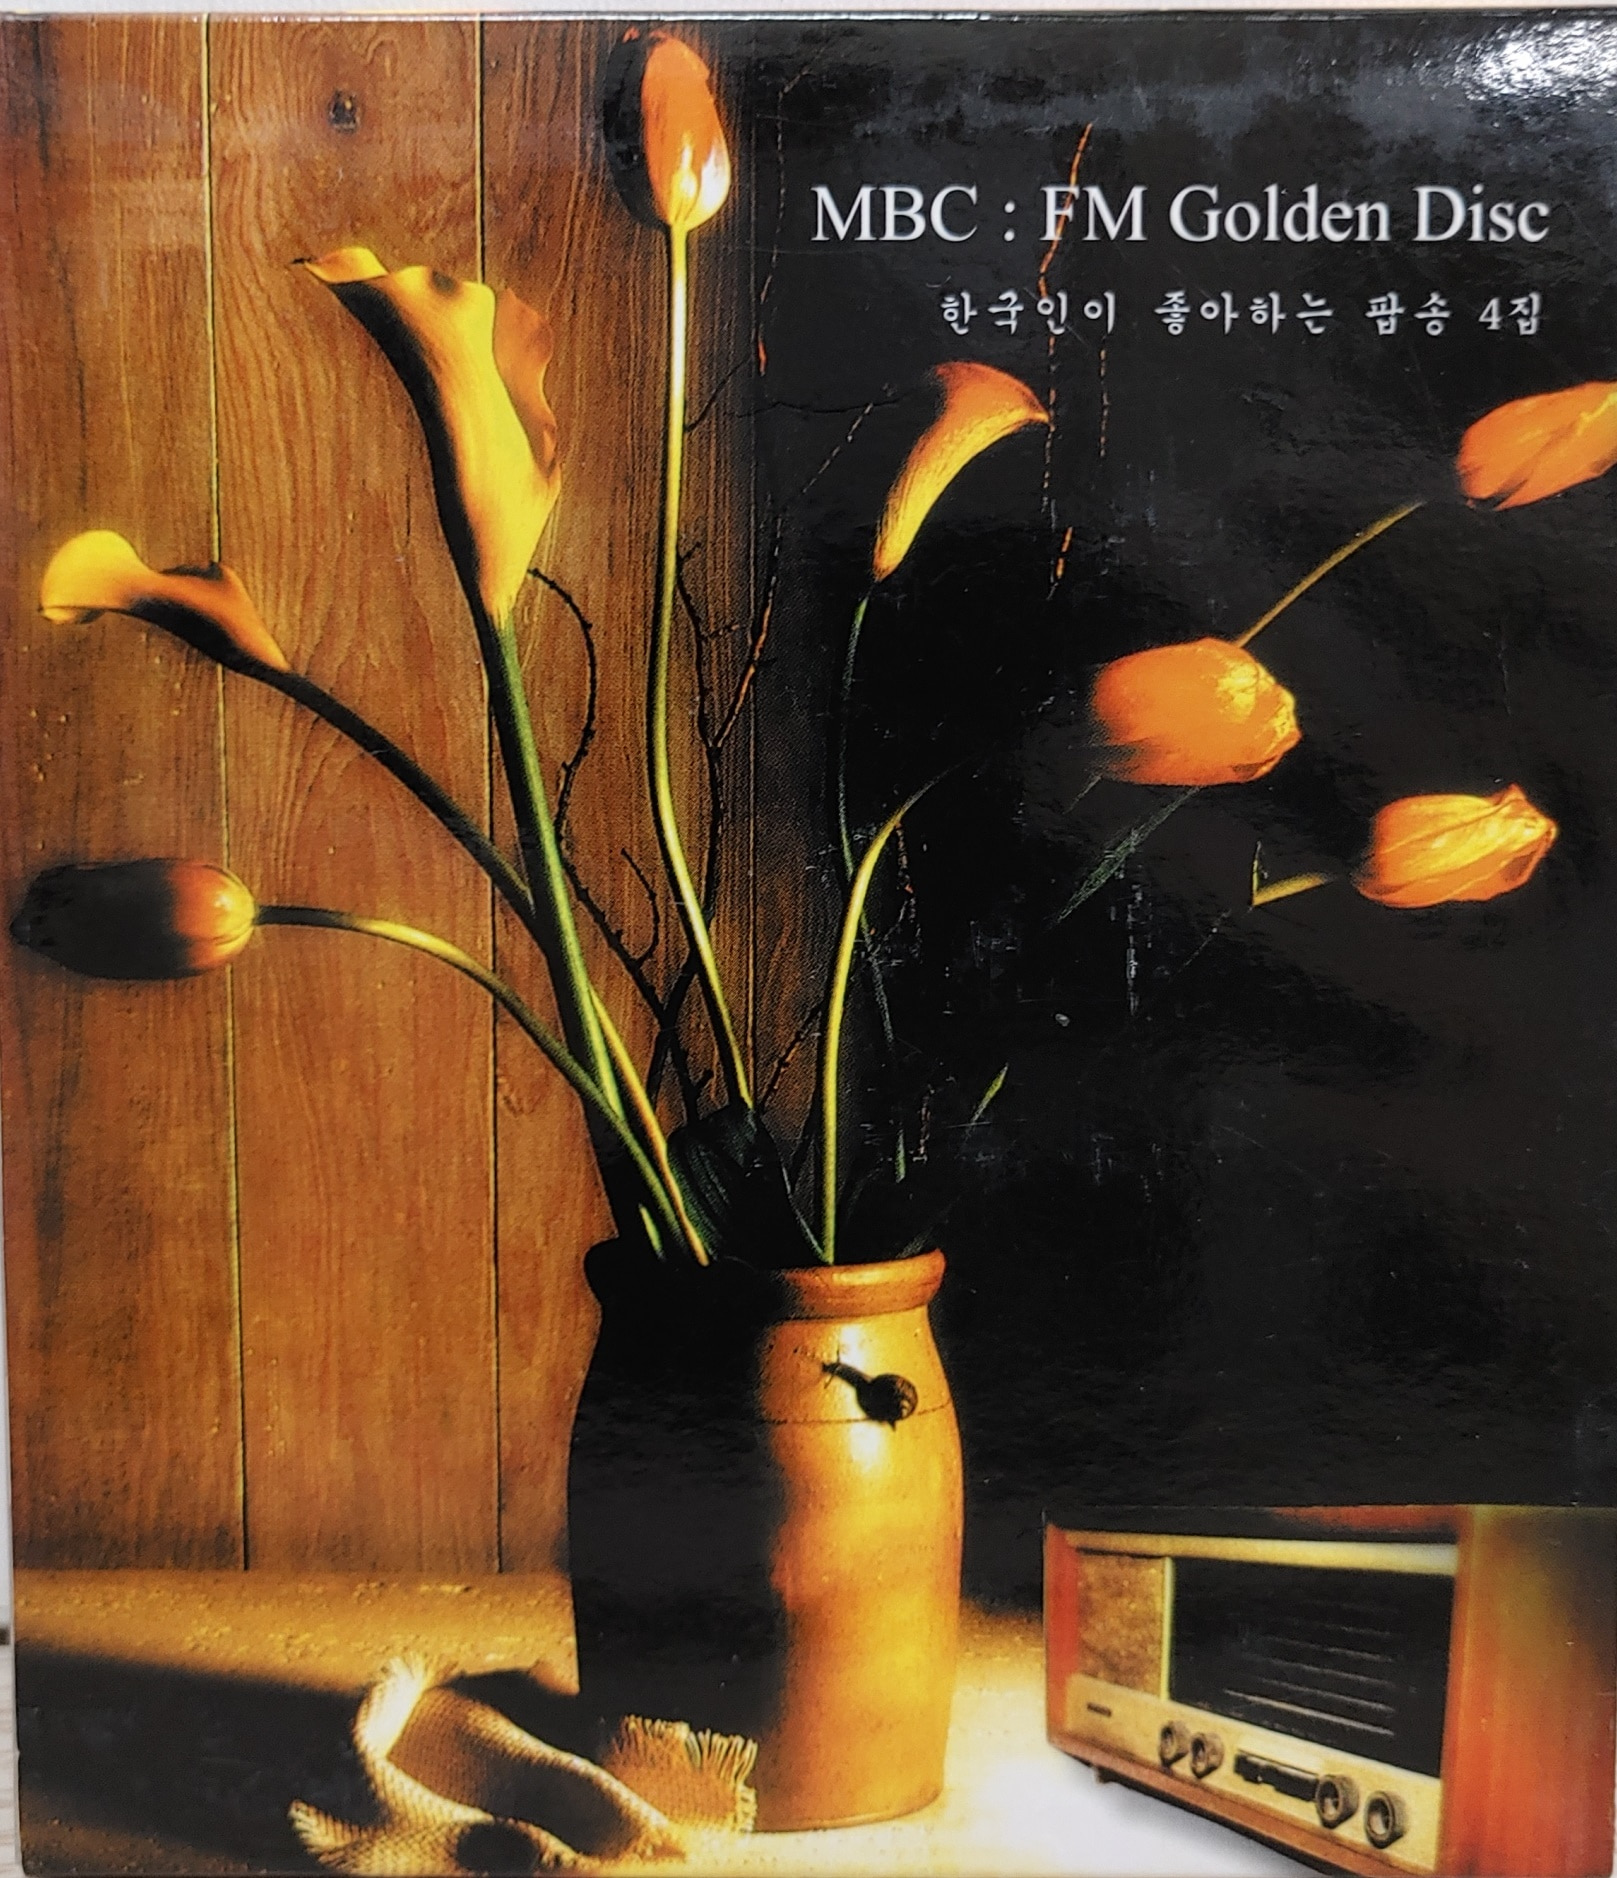 MBC FM Golden Disc 4 / 한국인이 좋아하는 팝송 4집